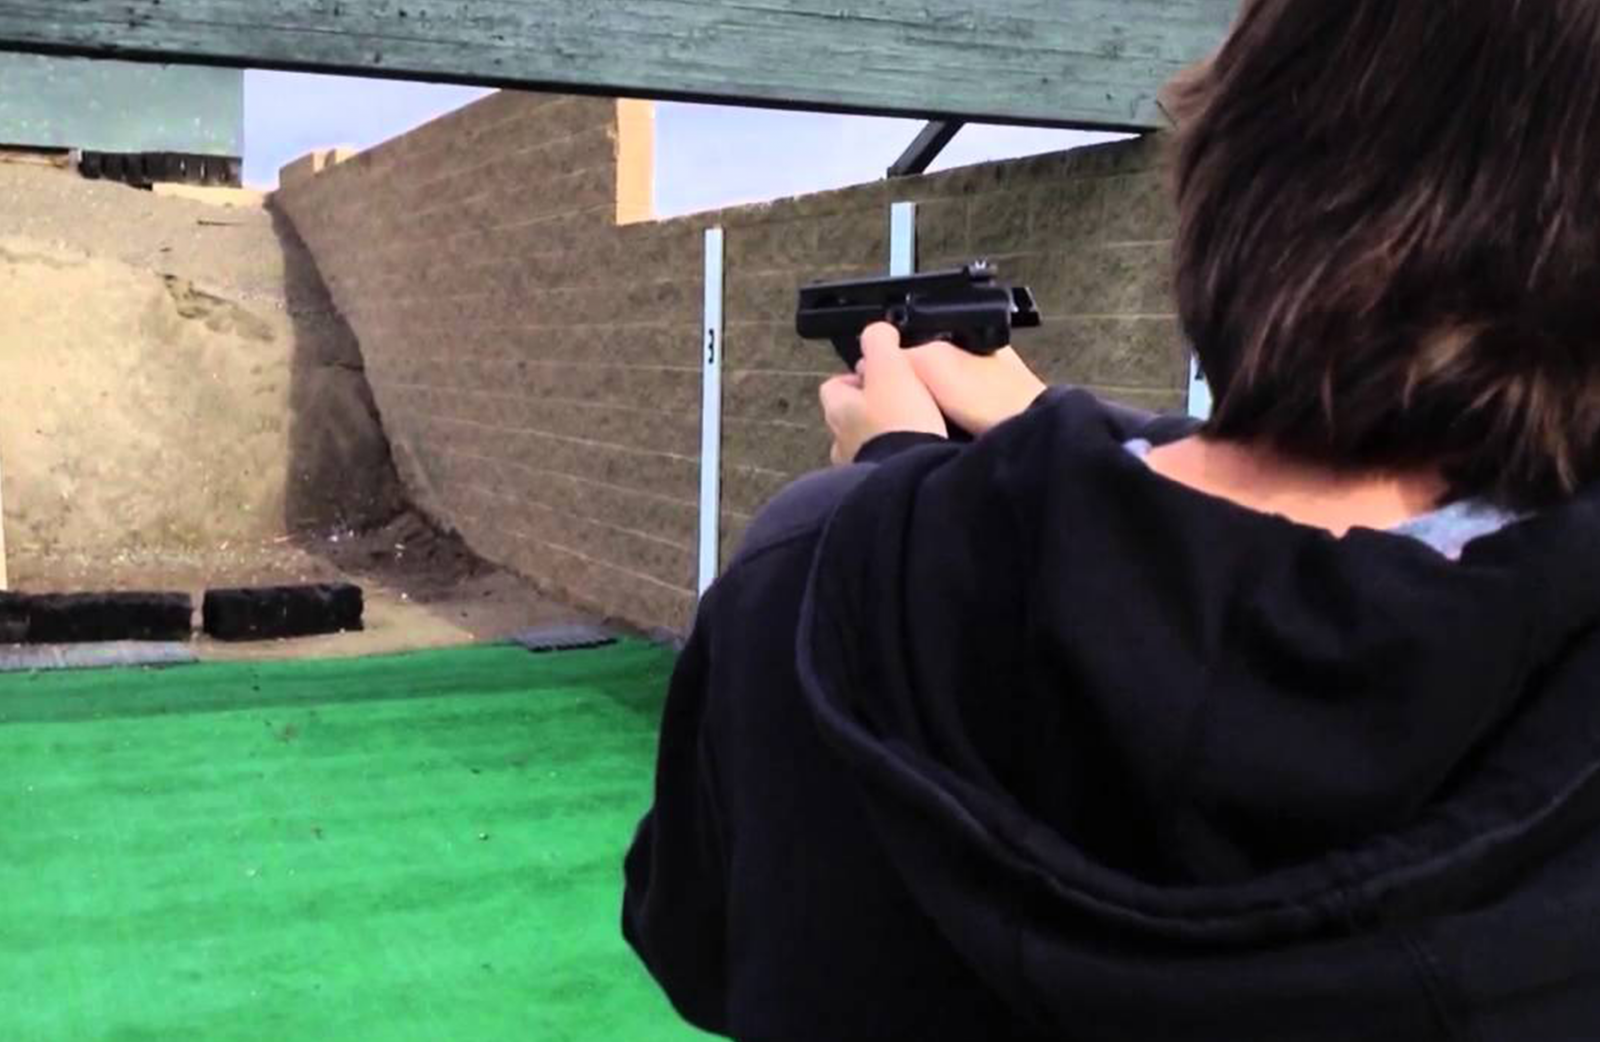 A woman shooting a gun at a target on a gun range..